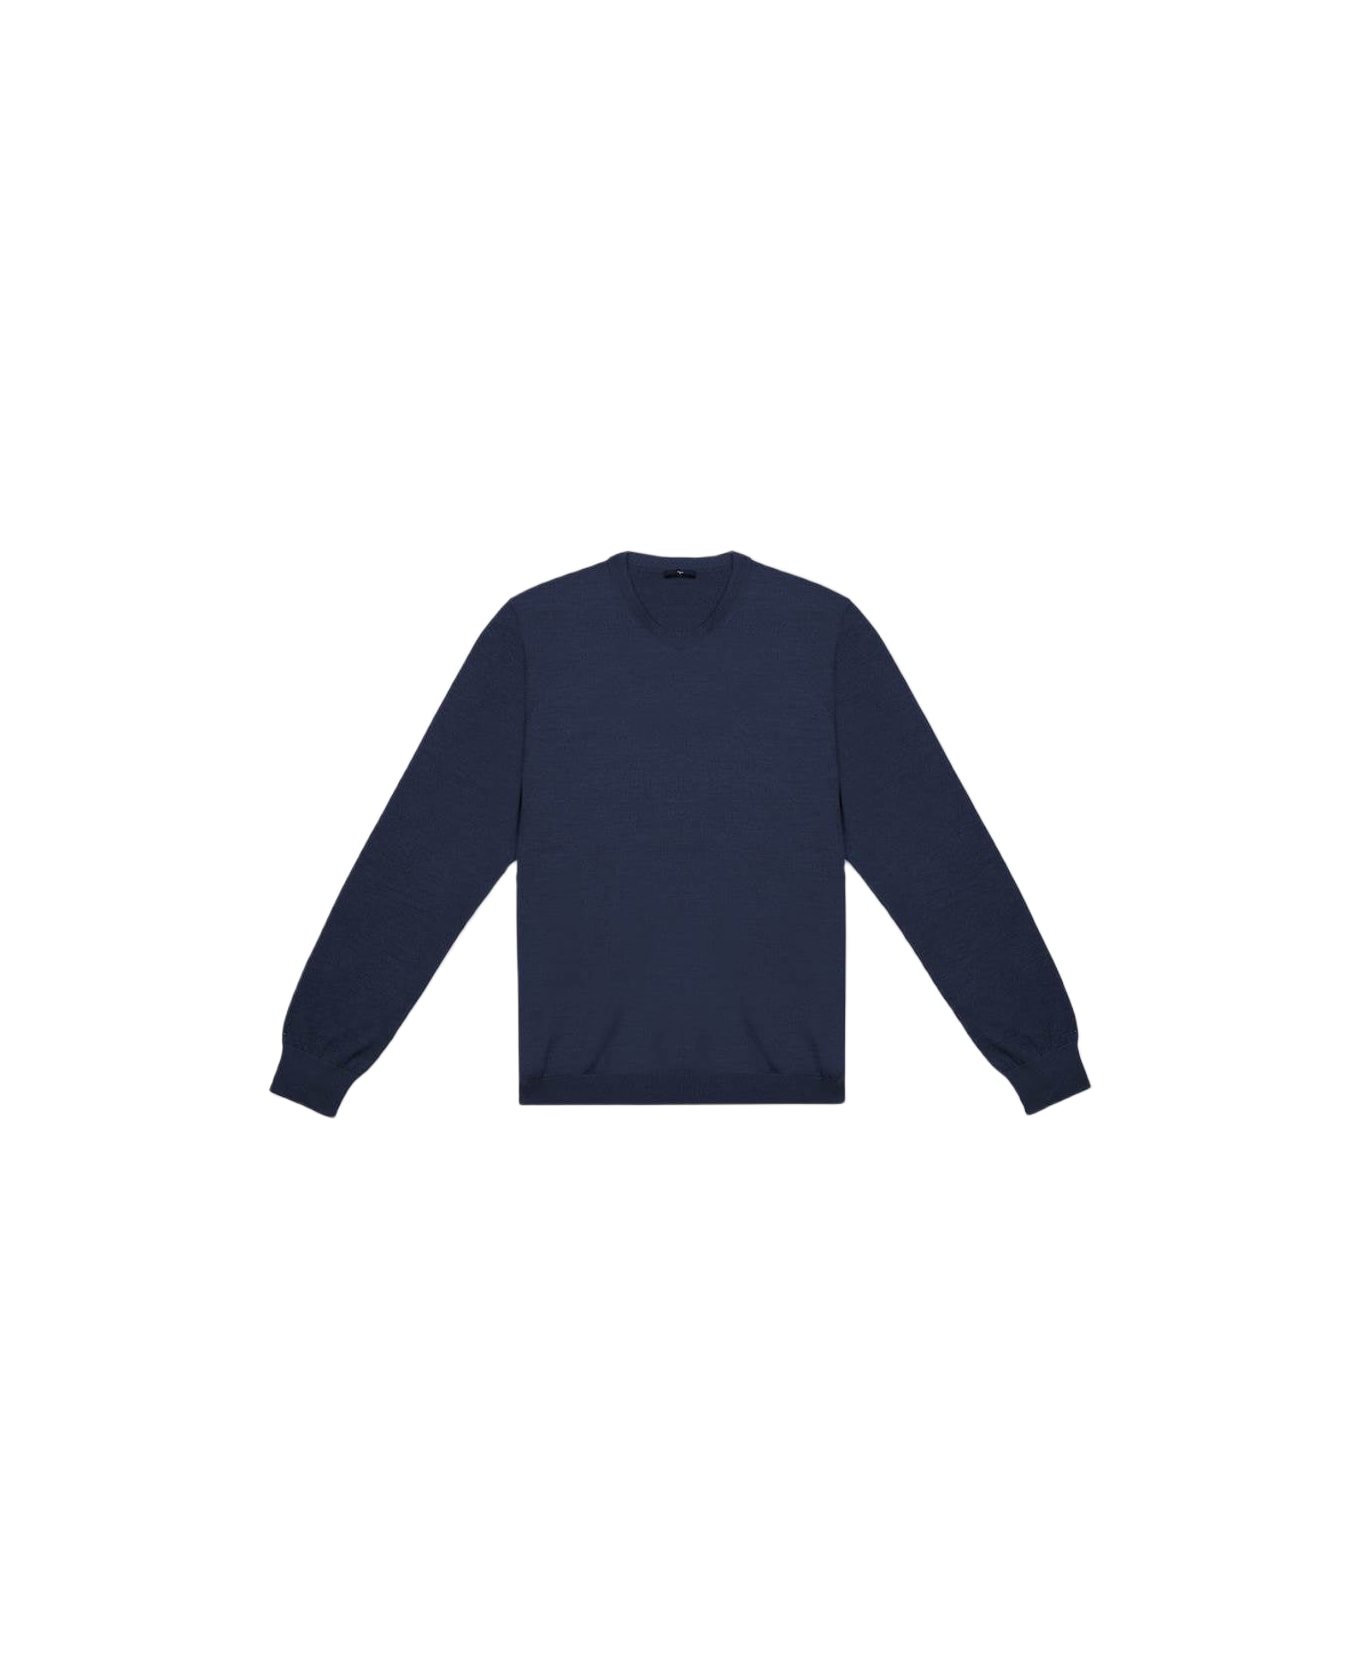 Larusmiani Crew Neck Sweater Sweater - MidnightBlue